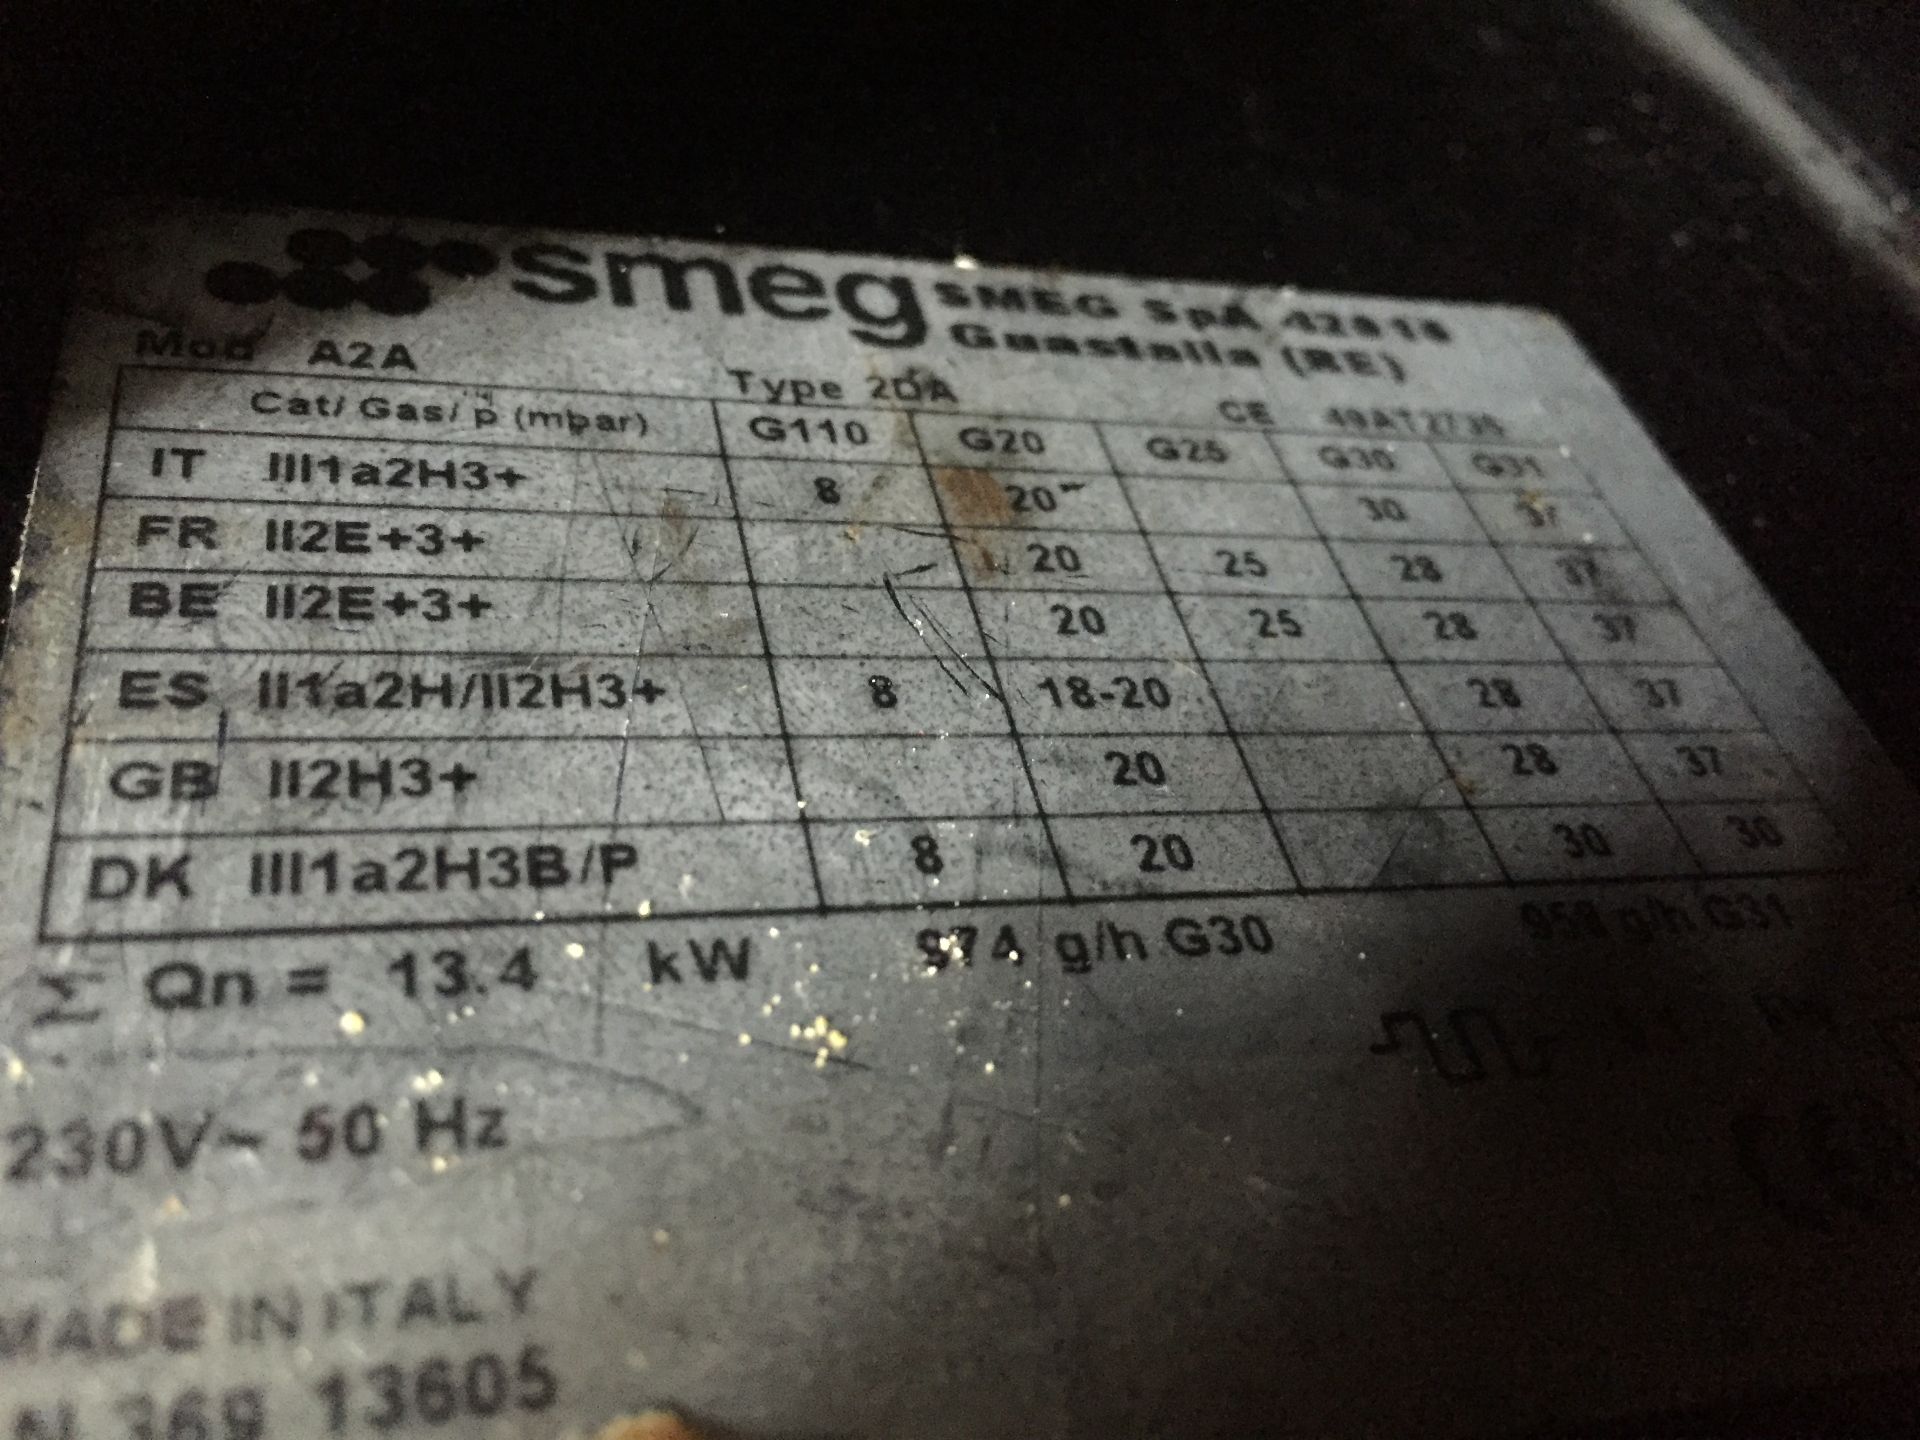 1 x Smeg 6 Burner Range Cooker - Type 2DA - Includes Smeg Extractor Hood - Excellent Condition - - Image 8 of 15